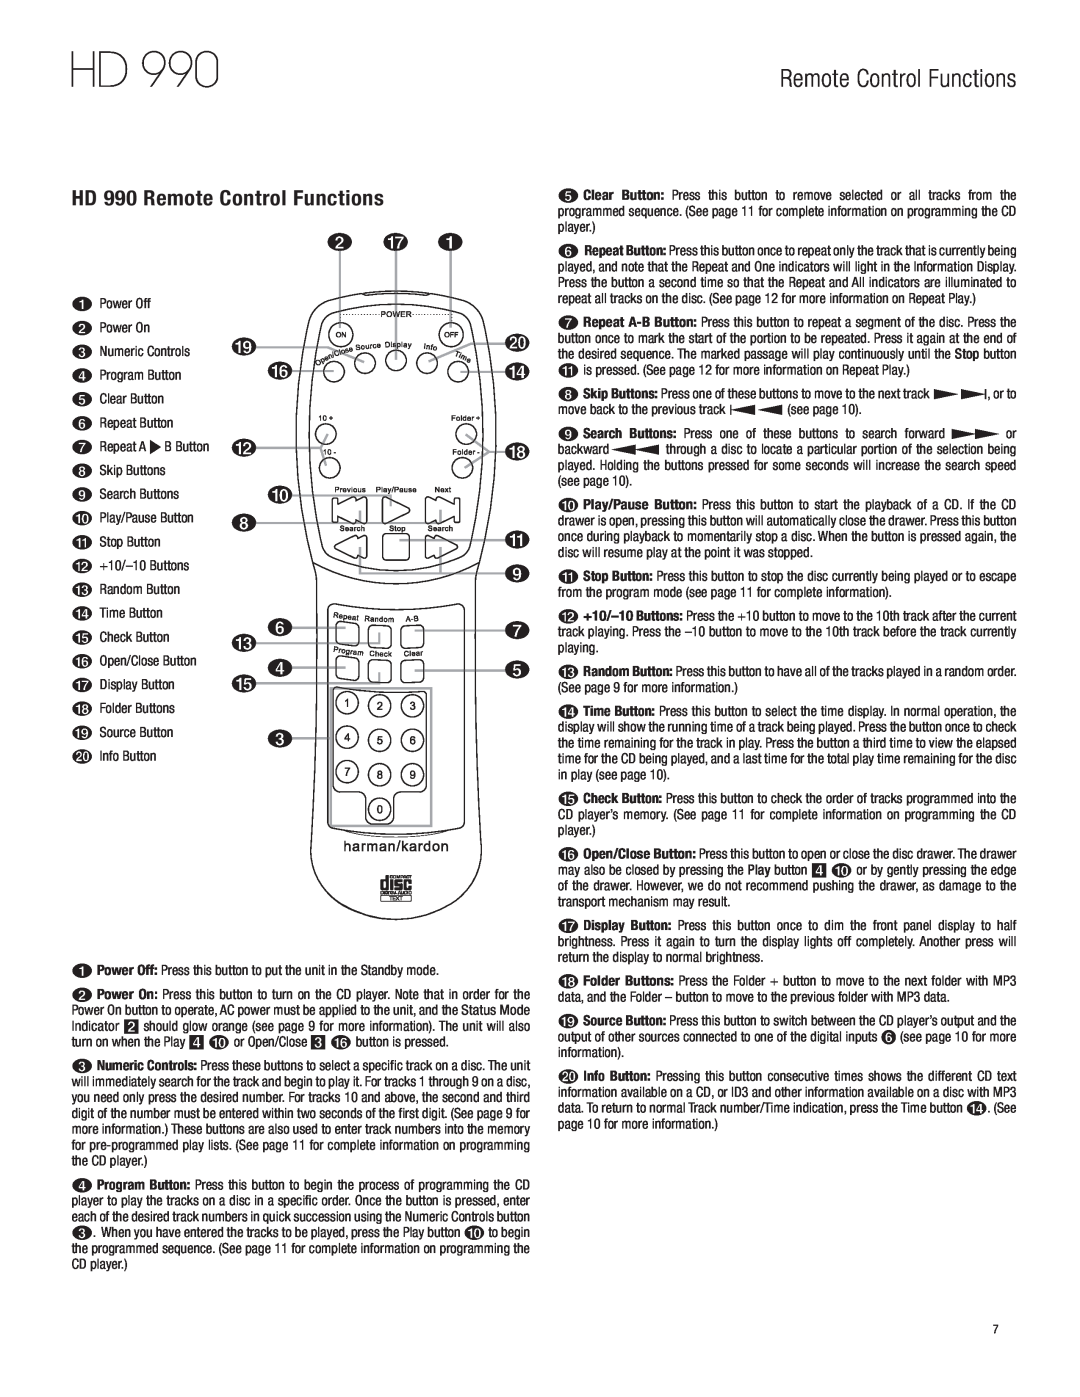 Harman-Kardon owner manual HD 990 Remote Control Functions 